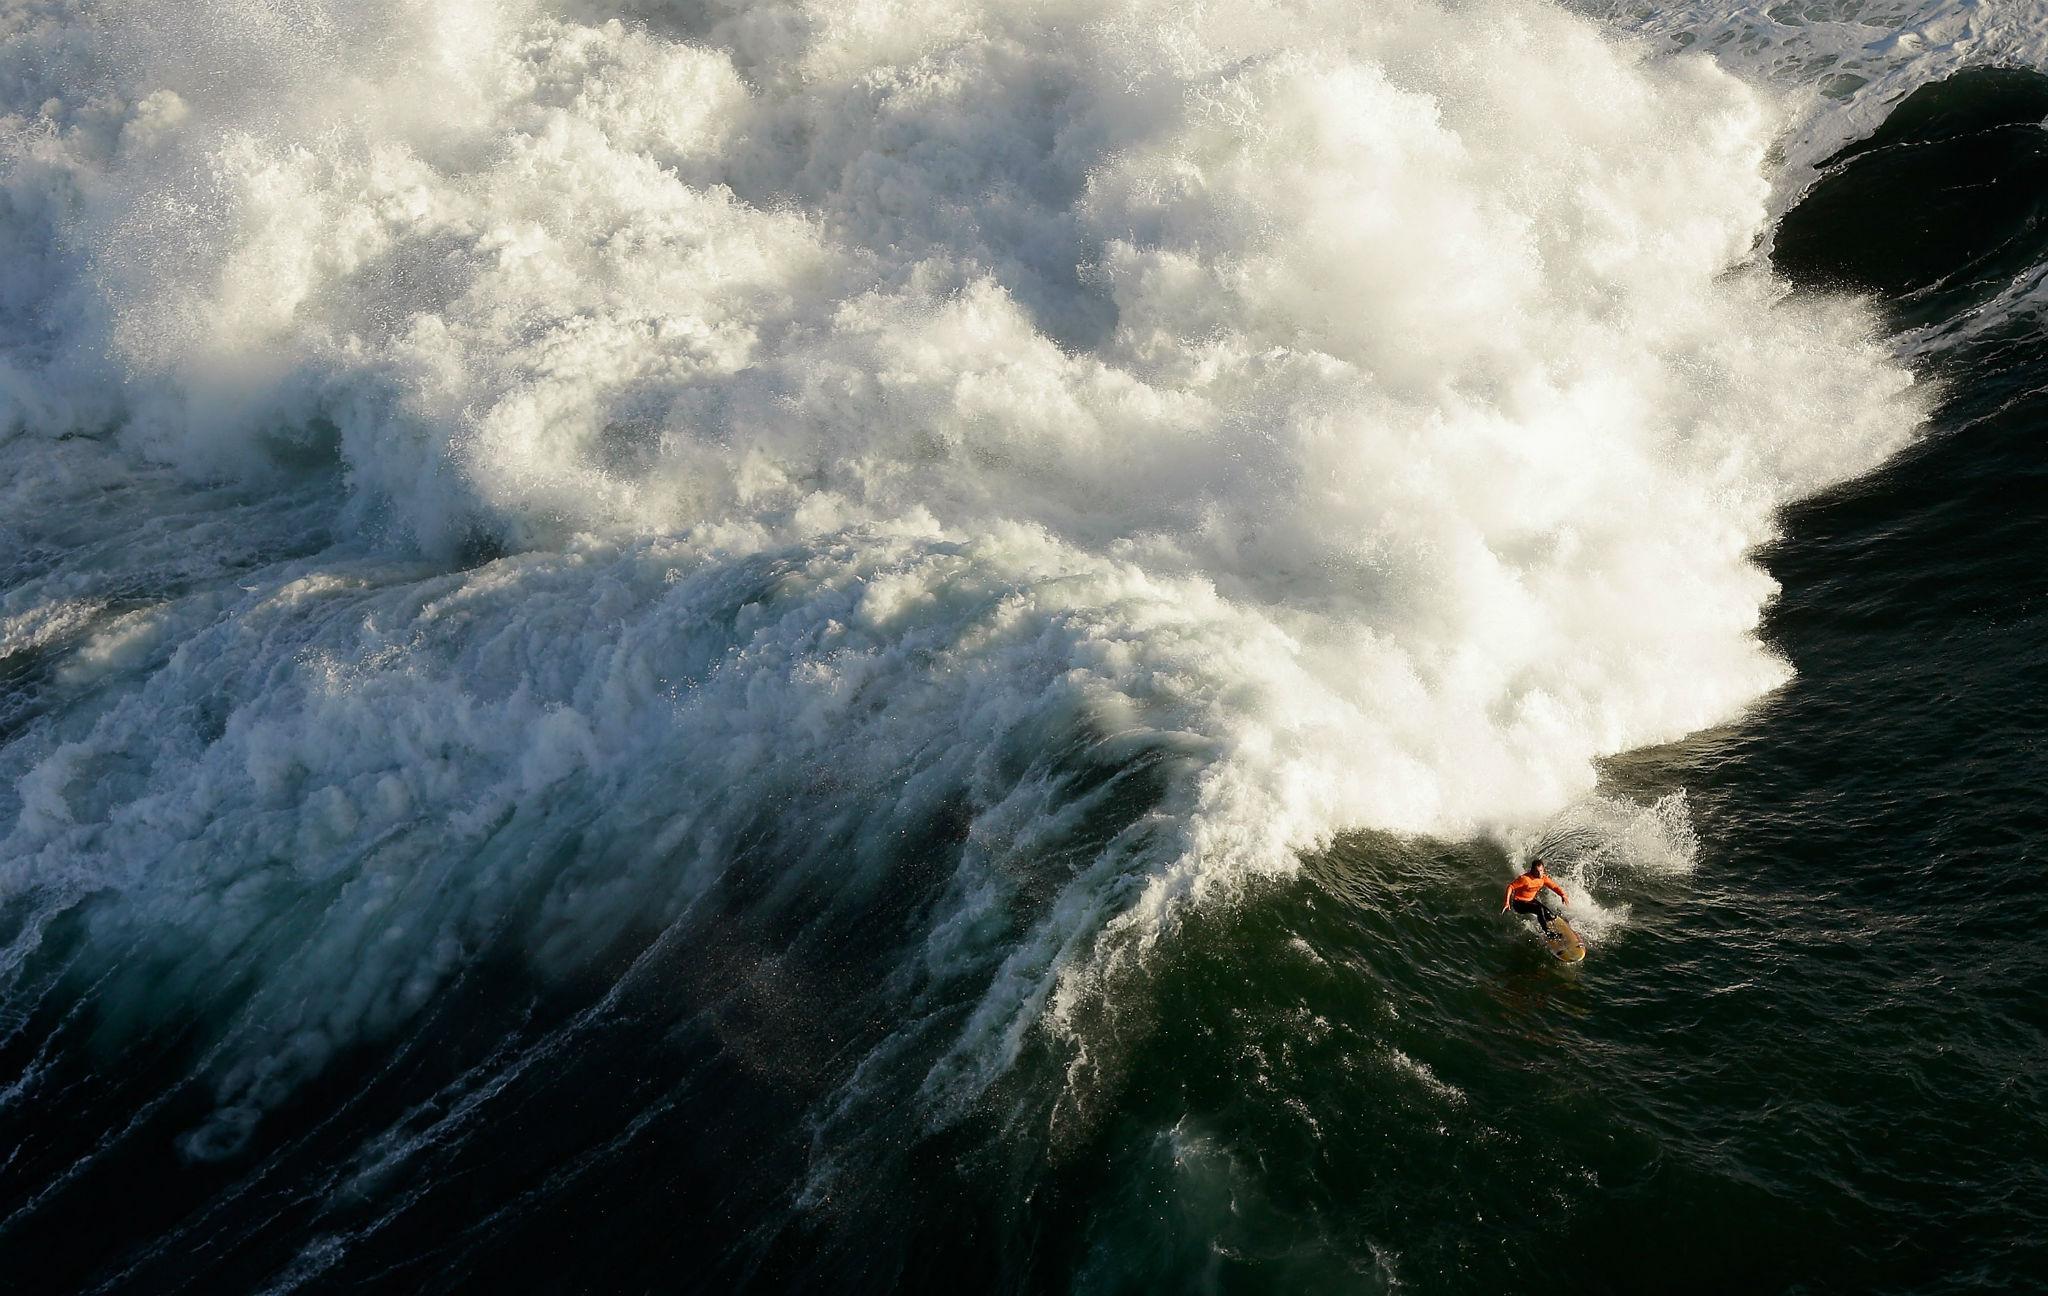 Swells at the Mavericks surf break near San Francisco often rise as high as 60 feet